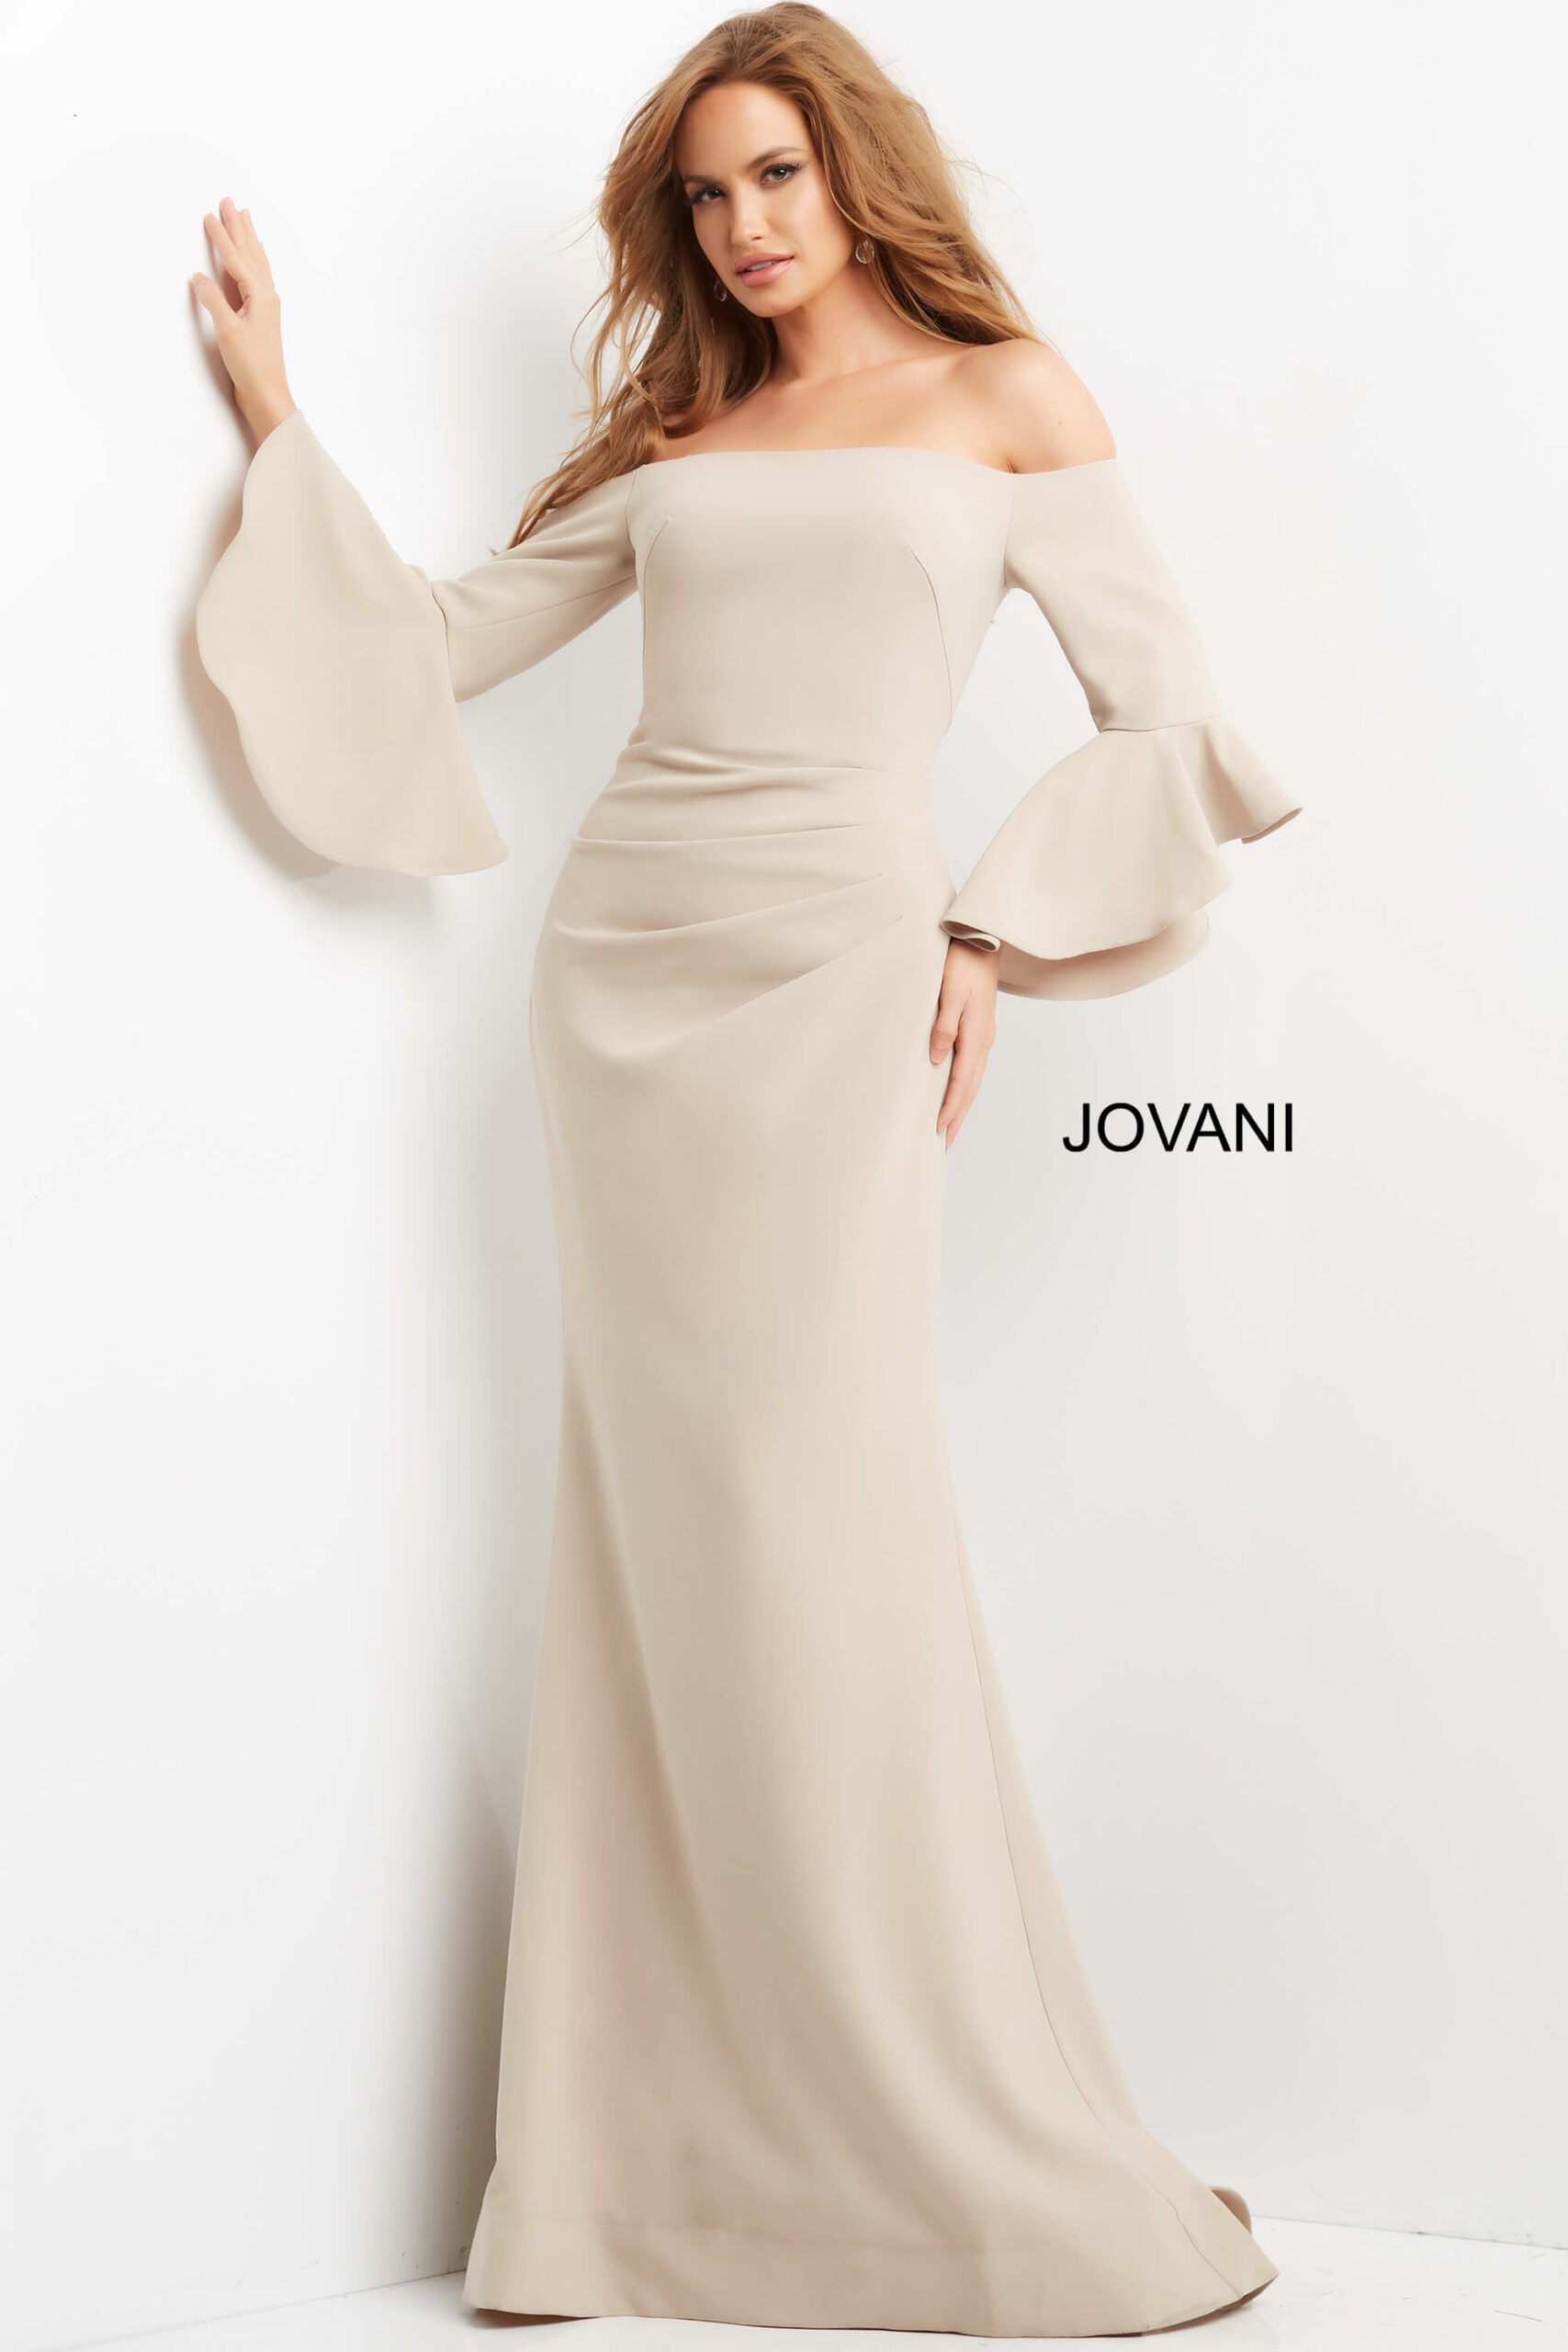 Jovani 07065 Cream Off the Shoulder Bell Sleeve Dress